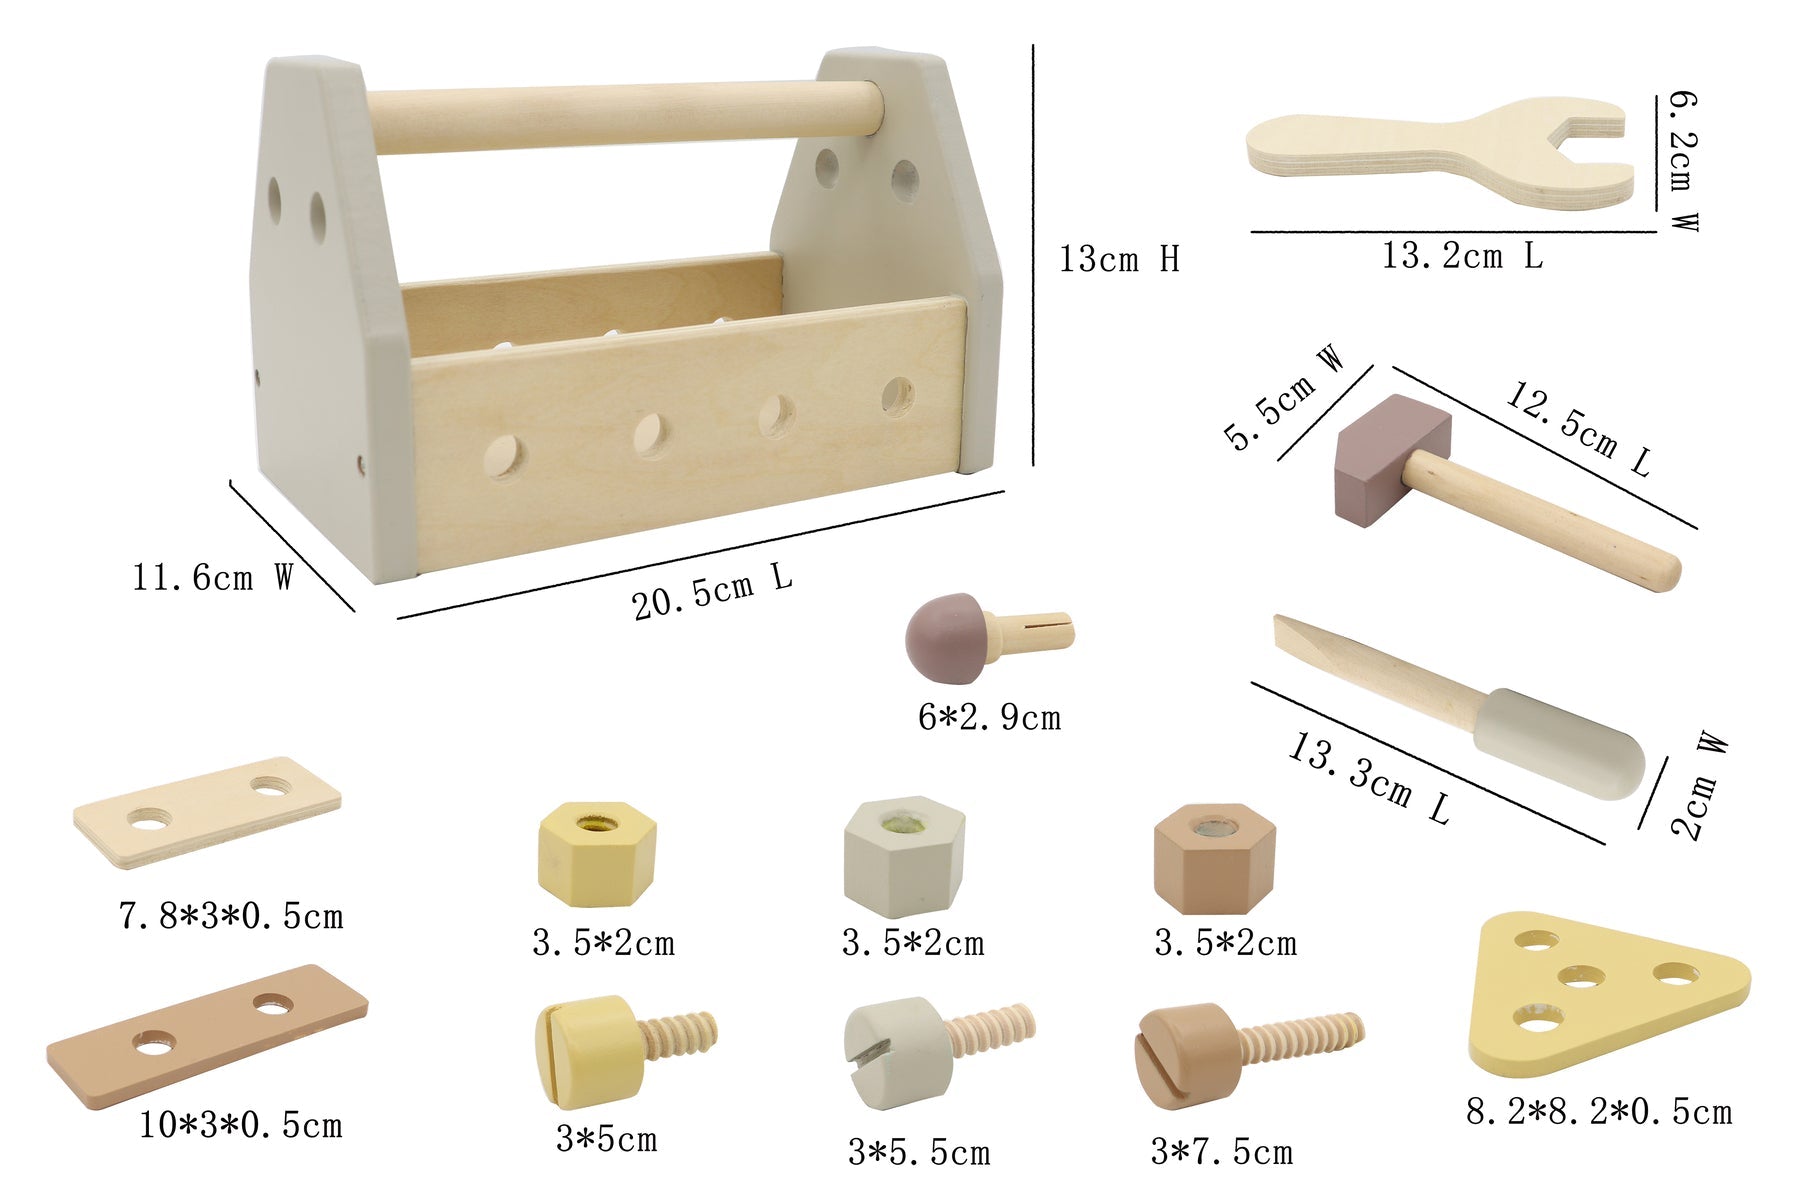 Fun Awaits: Calm & Breezy Wooden Tool Kit for kids